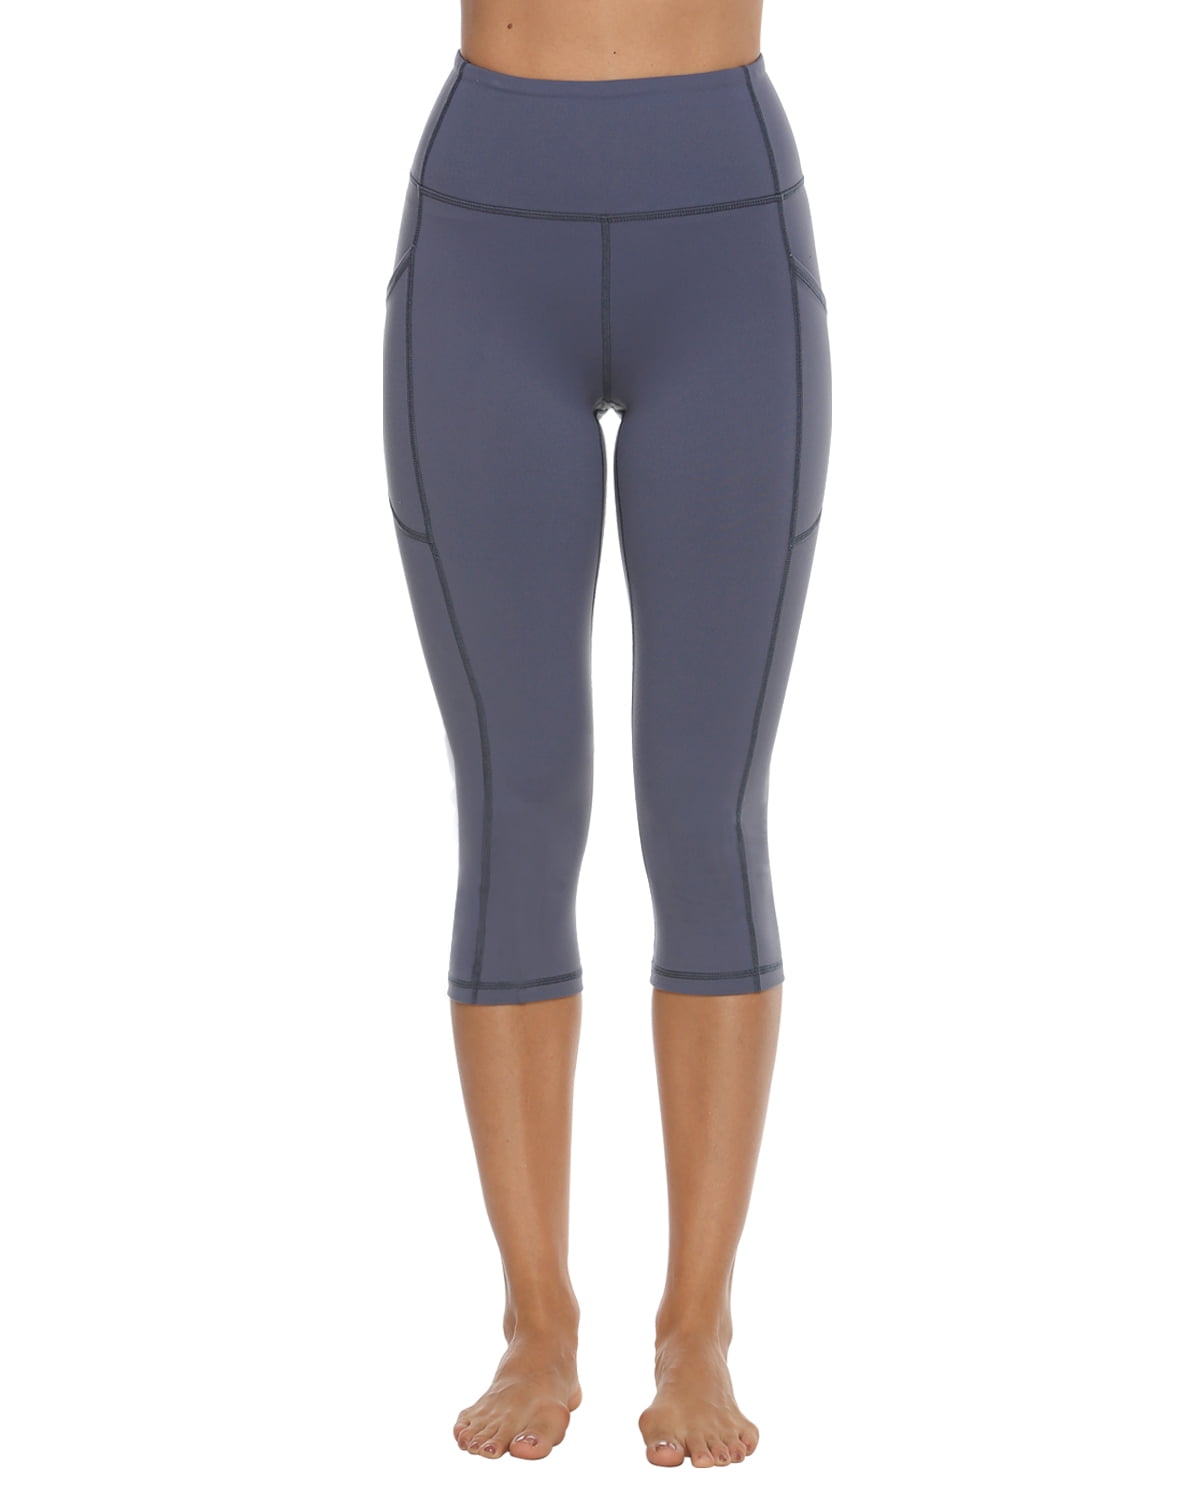 Stelle Now Women's Yoga Capri Yoga Pants with Side Pocket 